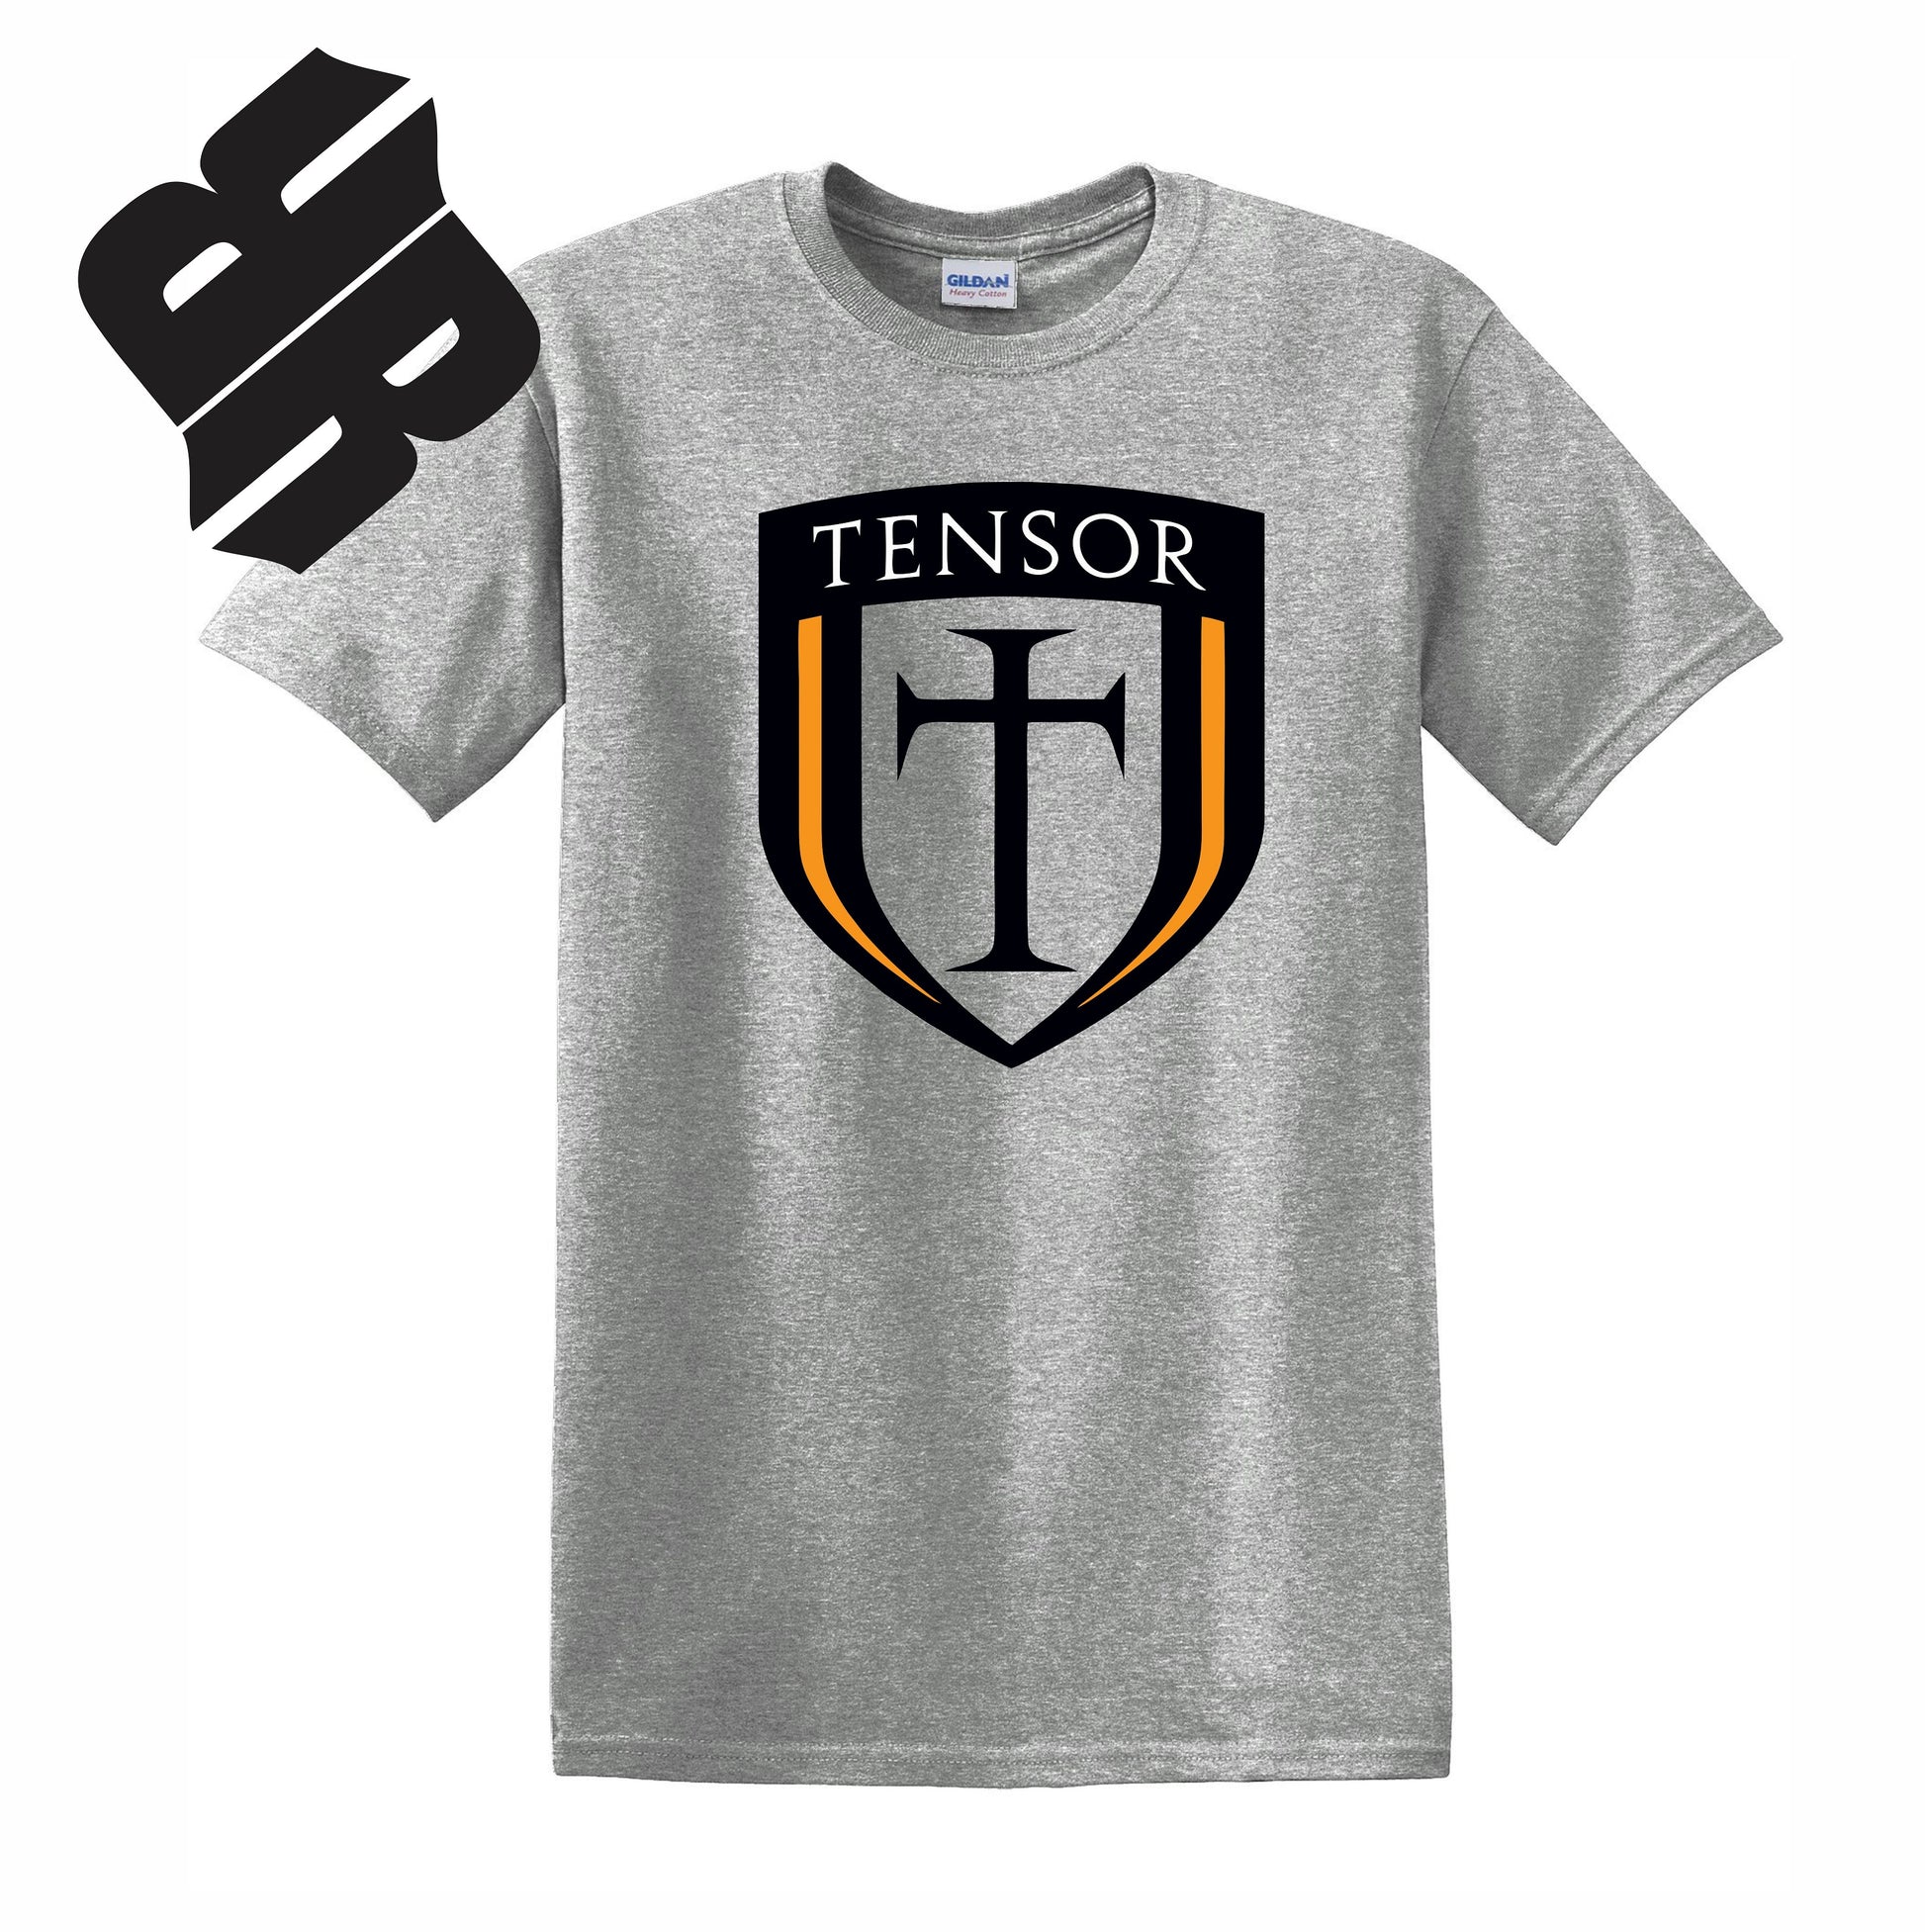 Skate Men's Shirt - Tensor (Gray) - MYSTYLEMYCLOTHING